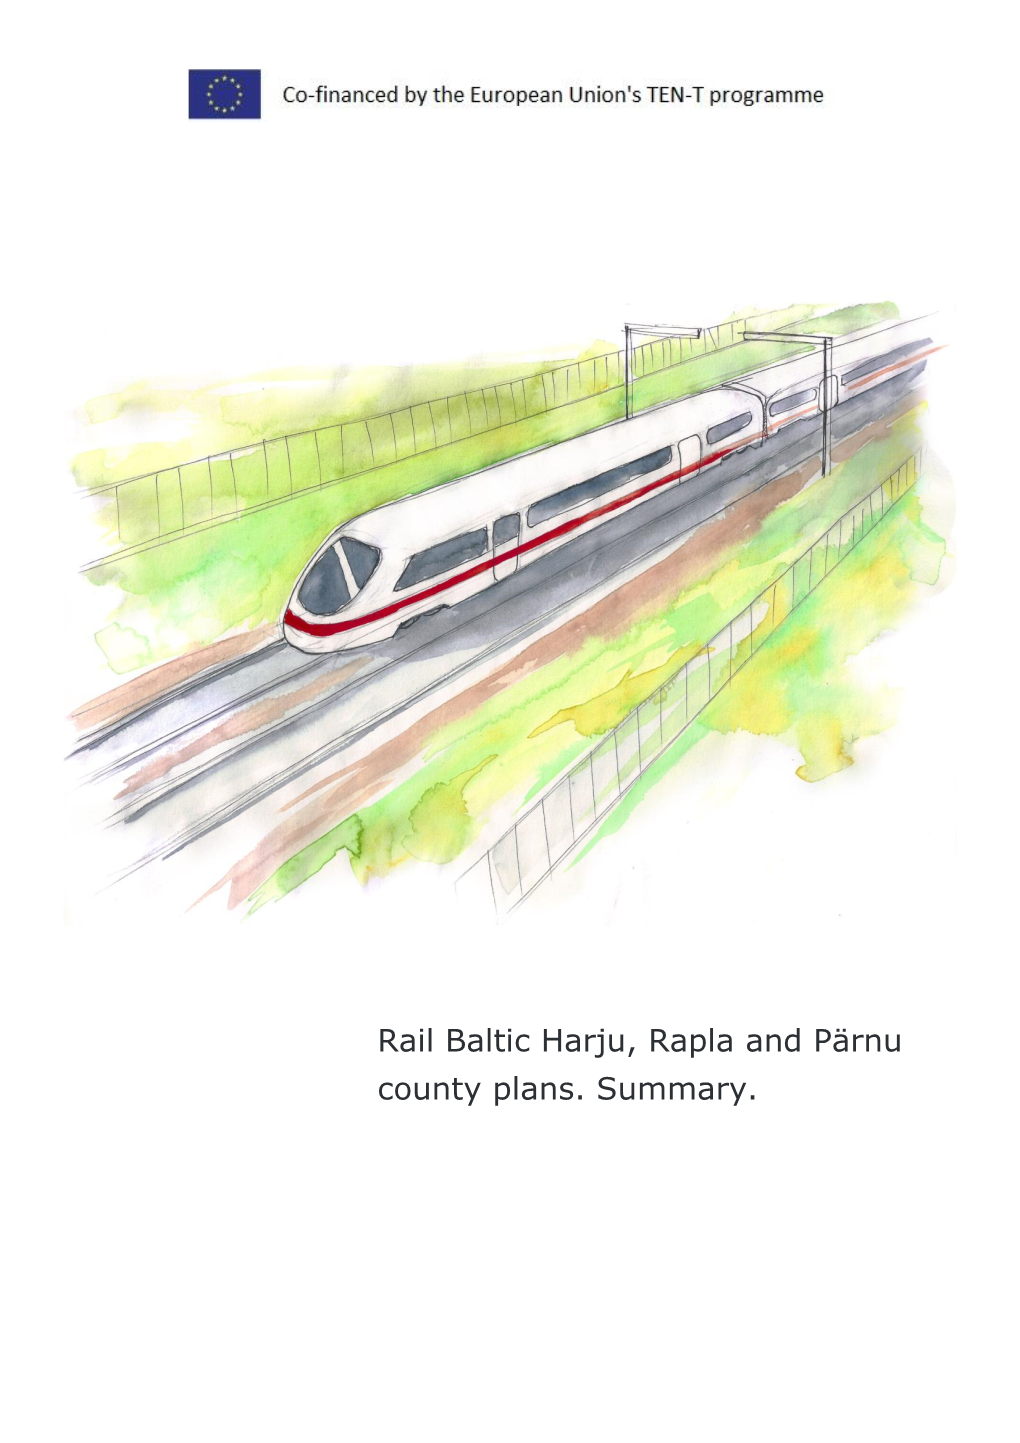 Rail Baltic Harju, Rapla and Pärnu County Plans. Summary